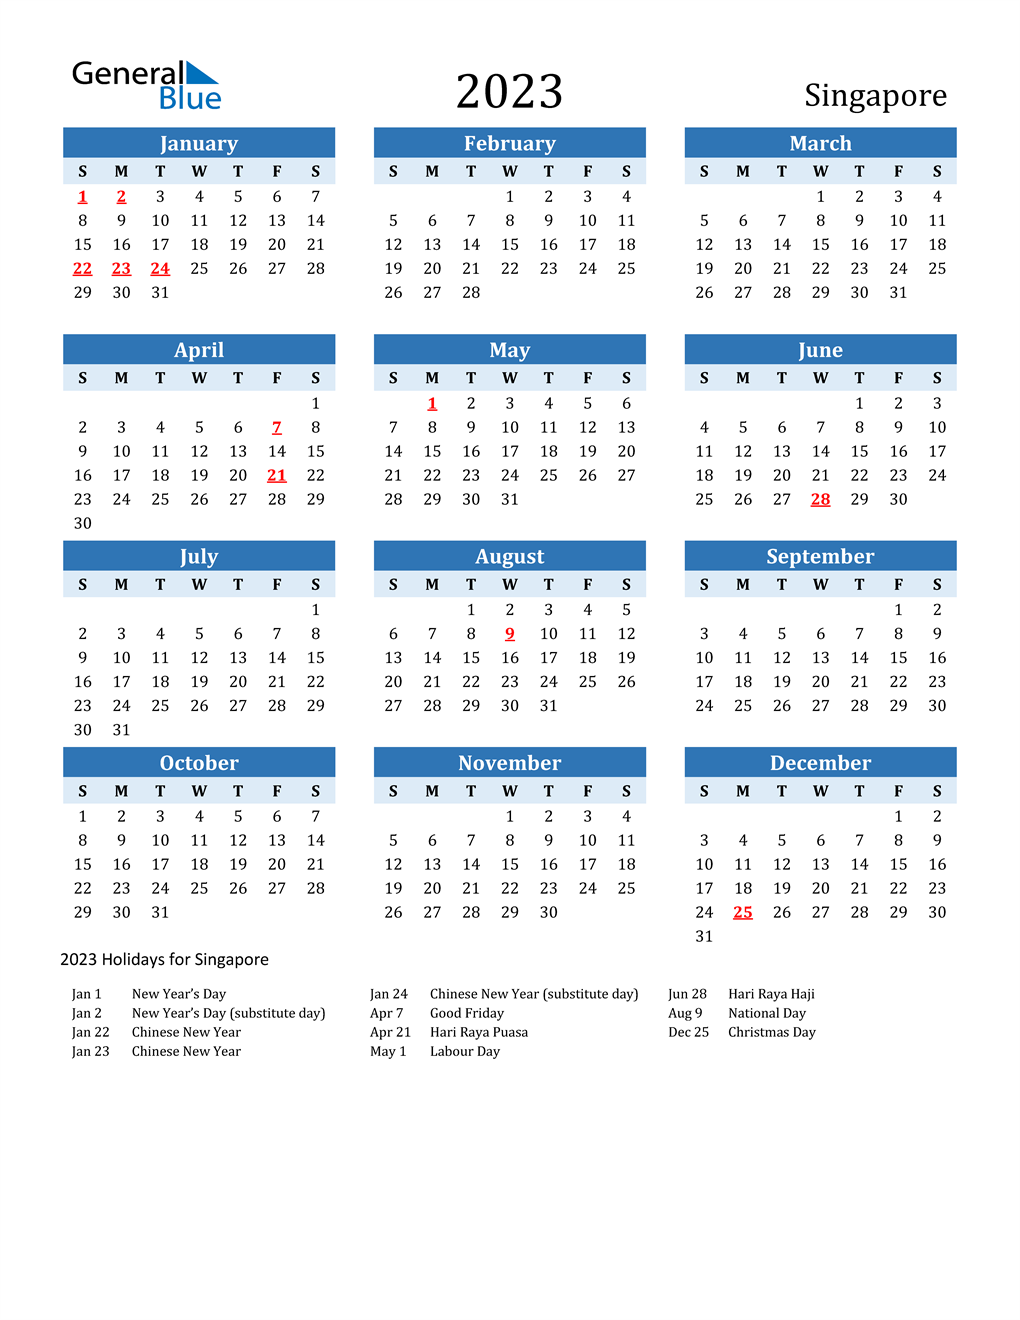 Marist College 2022 2023 Calendar 2023 Singapore Calendar With Holidays